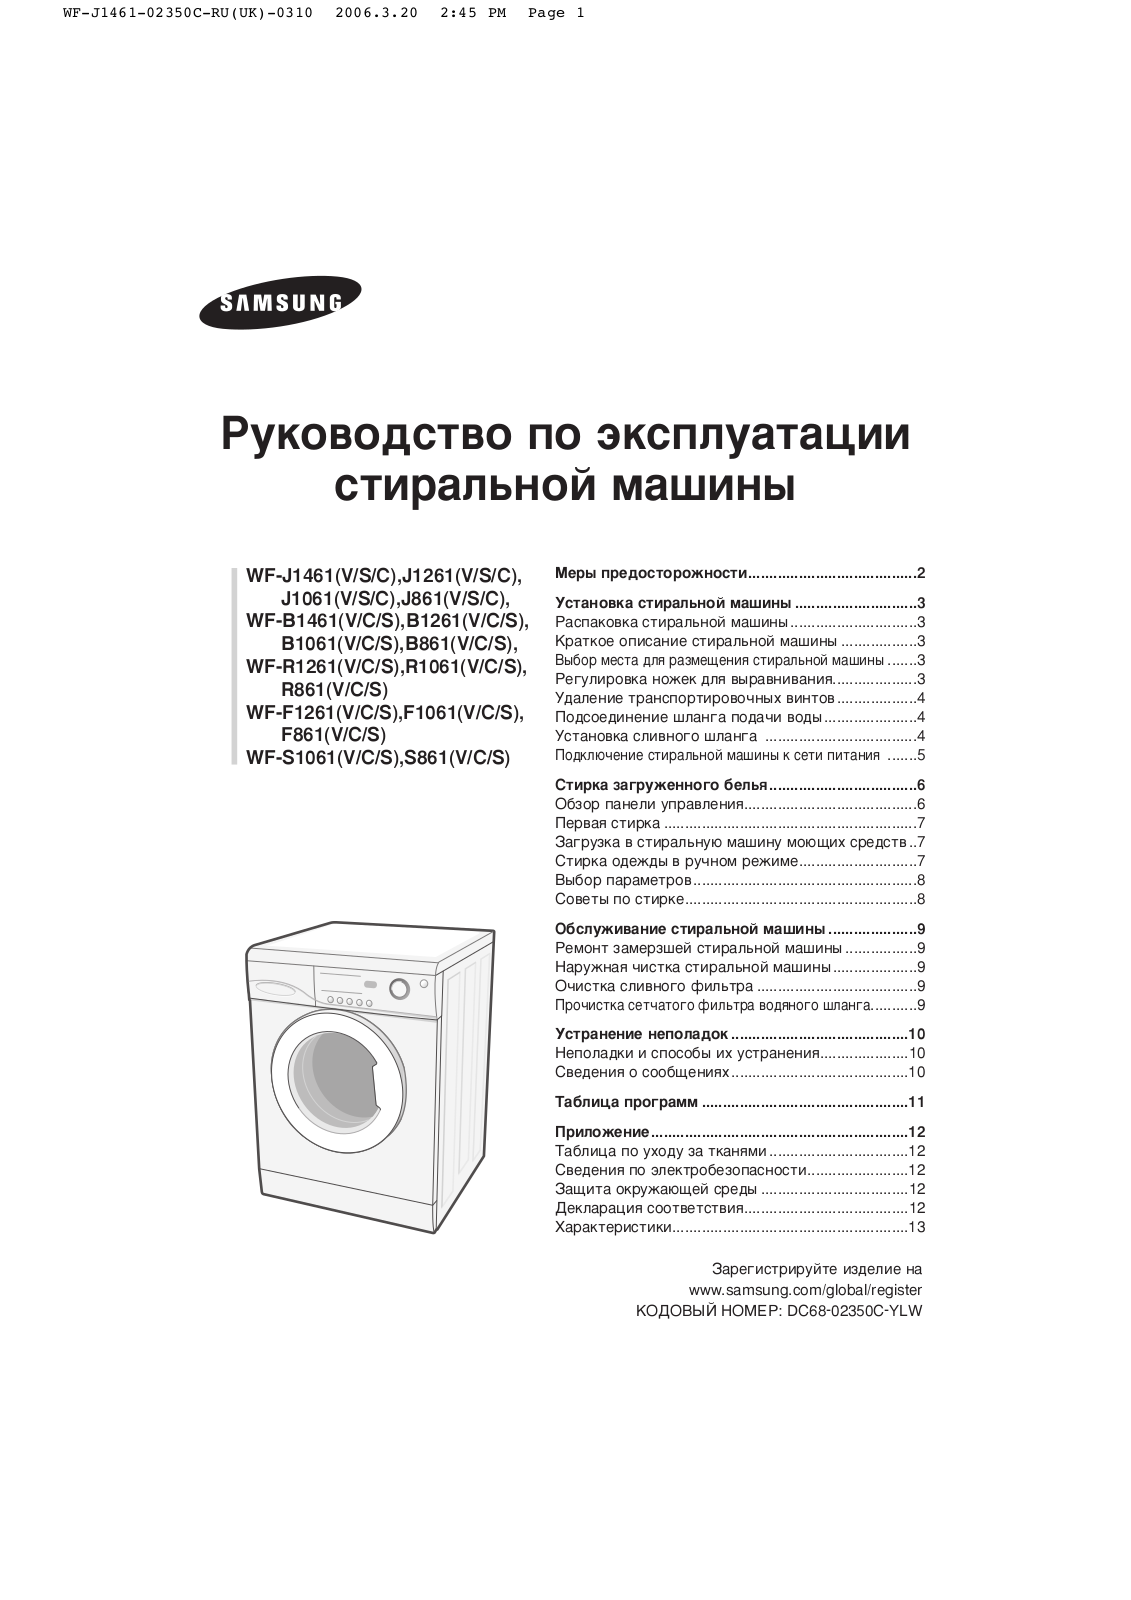 Samsung WF-F1061 User Manual